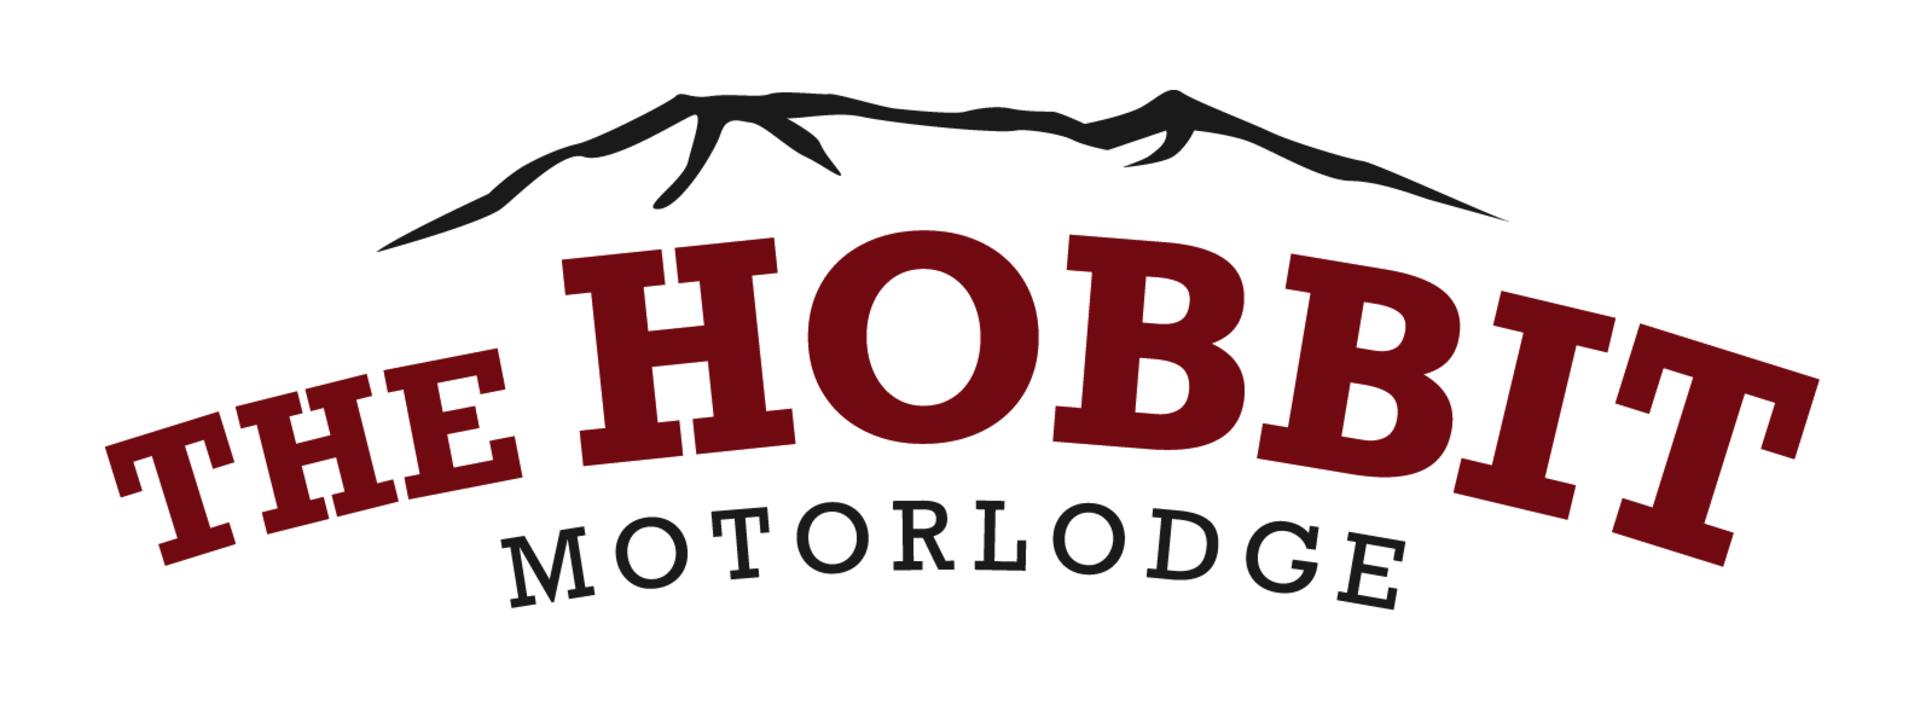 thehobbit_logo_burgundy.jpg